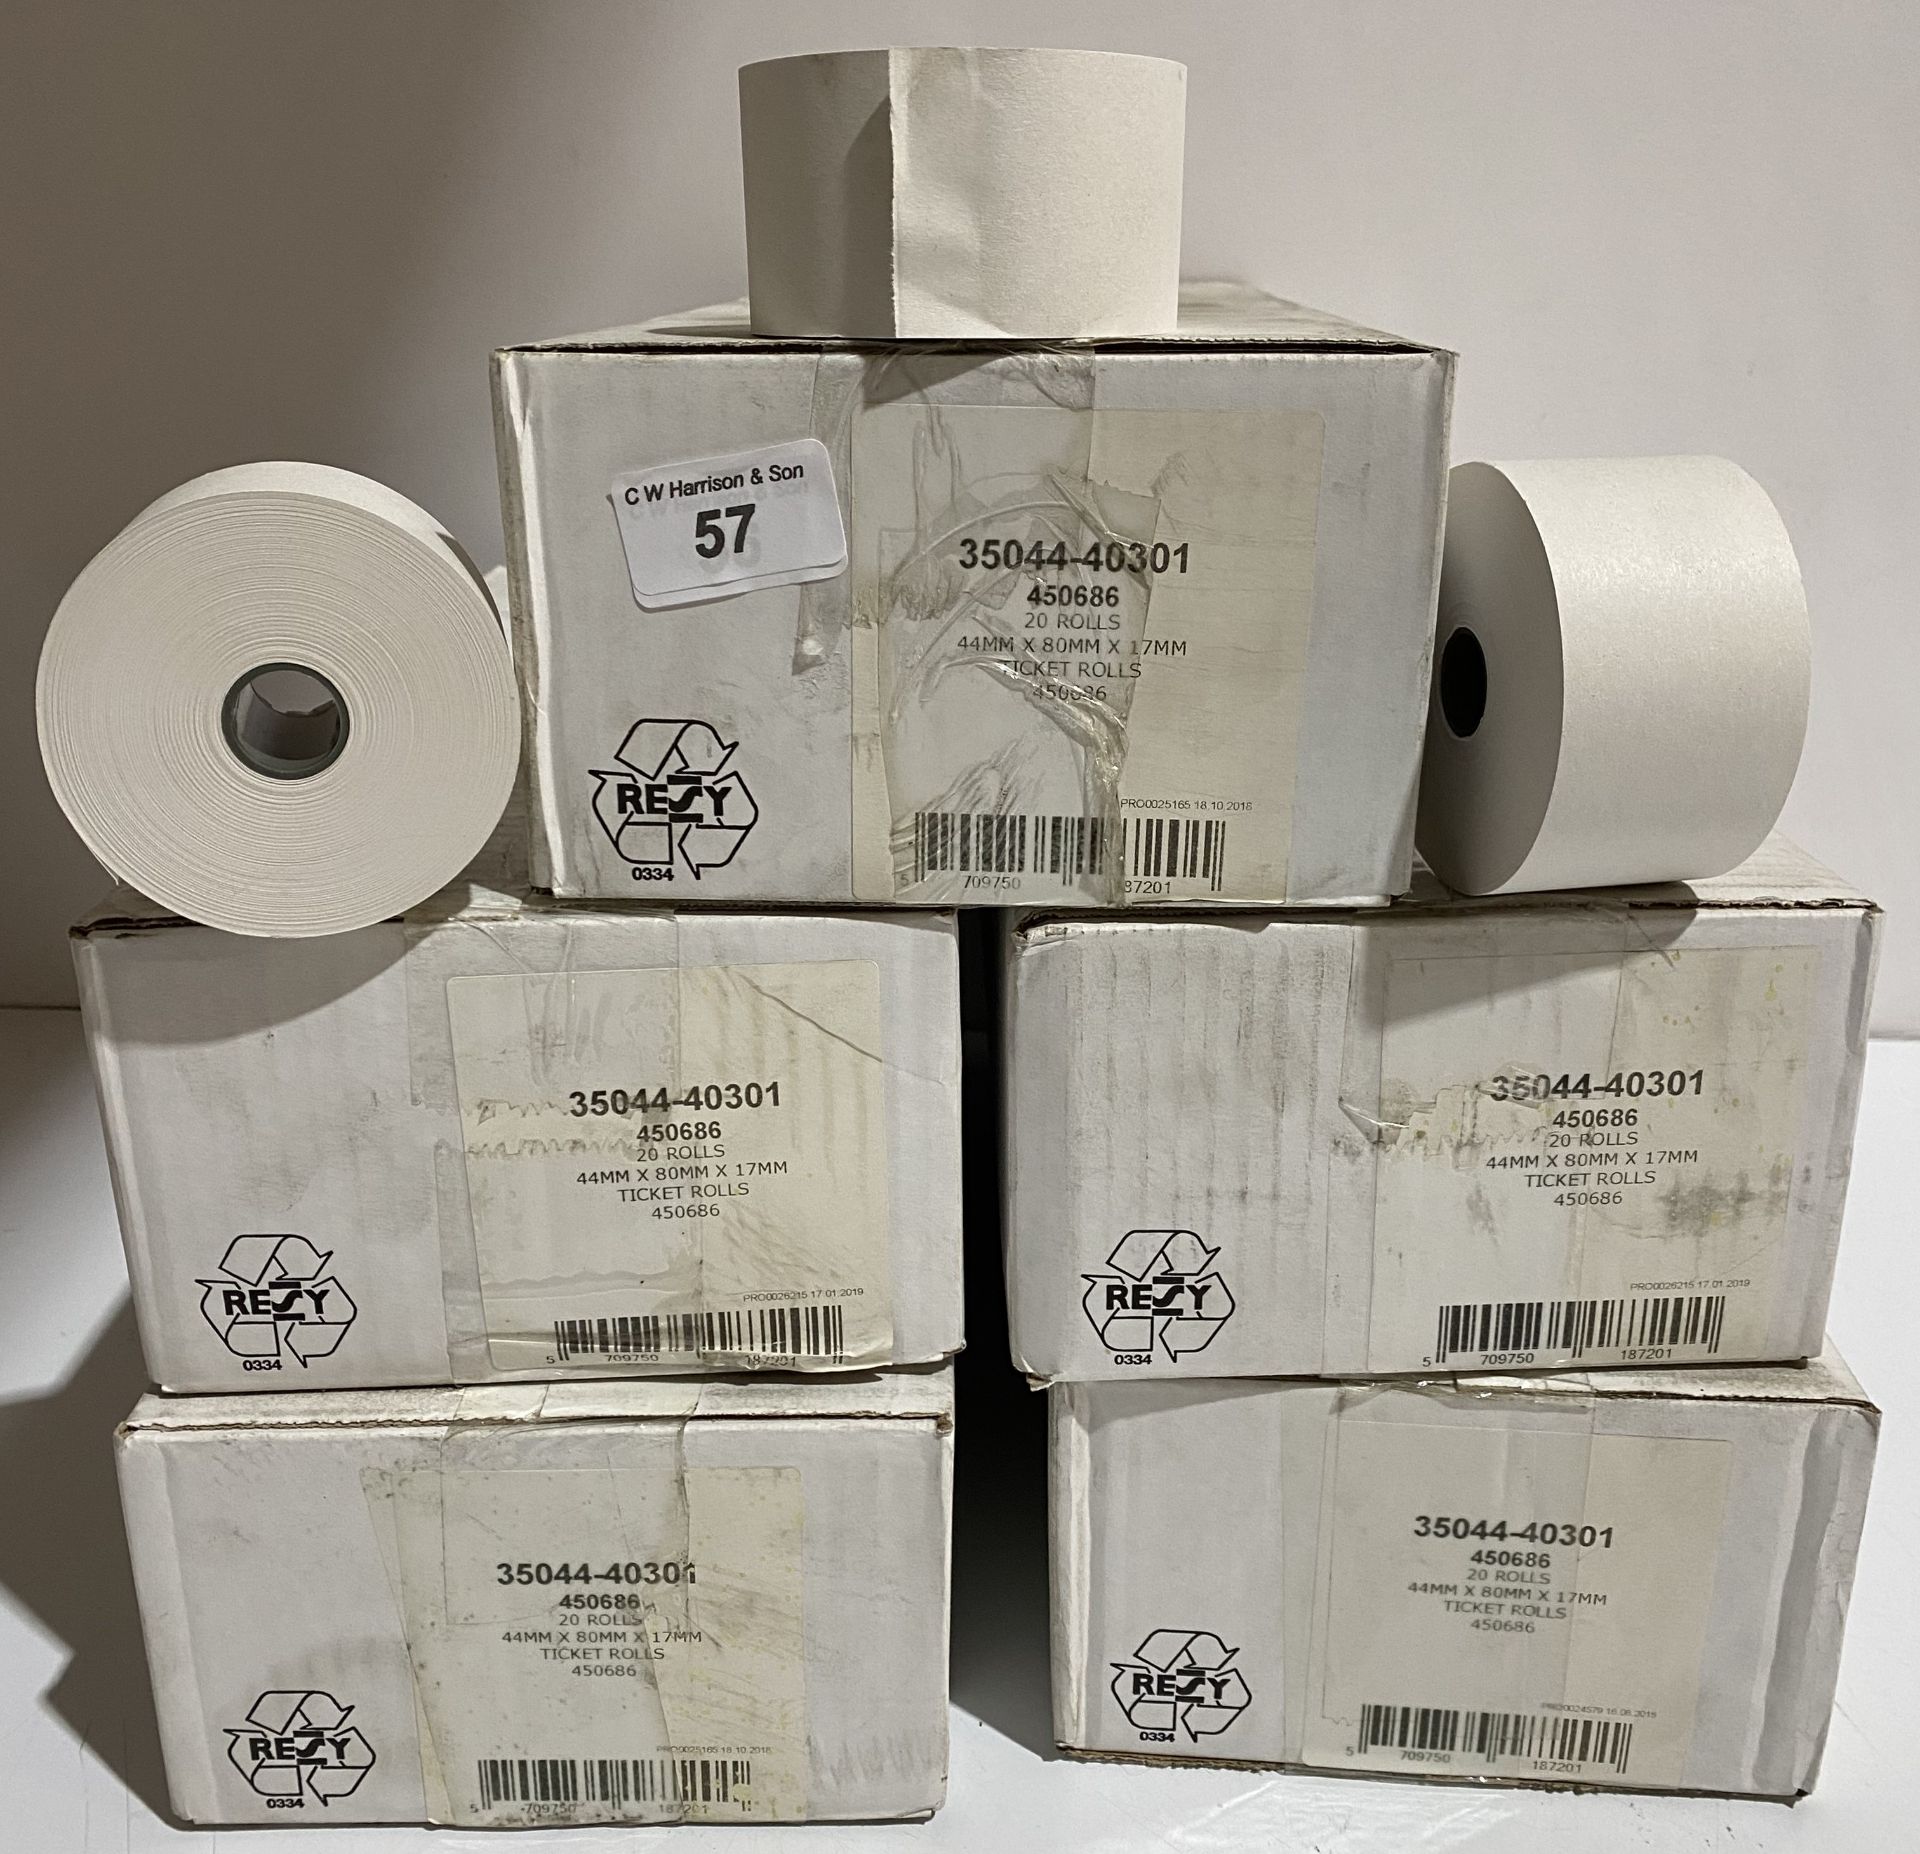 5 x boxes of 20 rolls each box single ply ticket/thermal/cash register receipt rolls 44x80x17mm